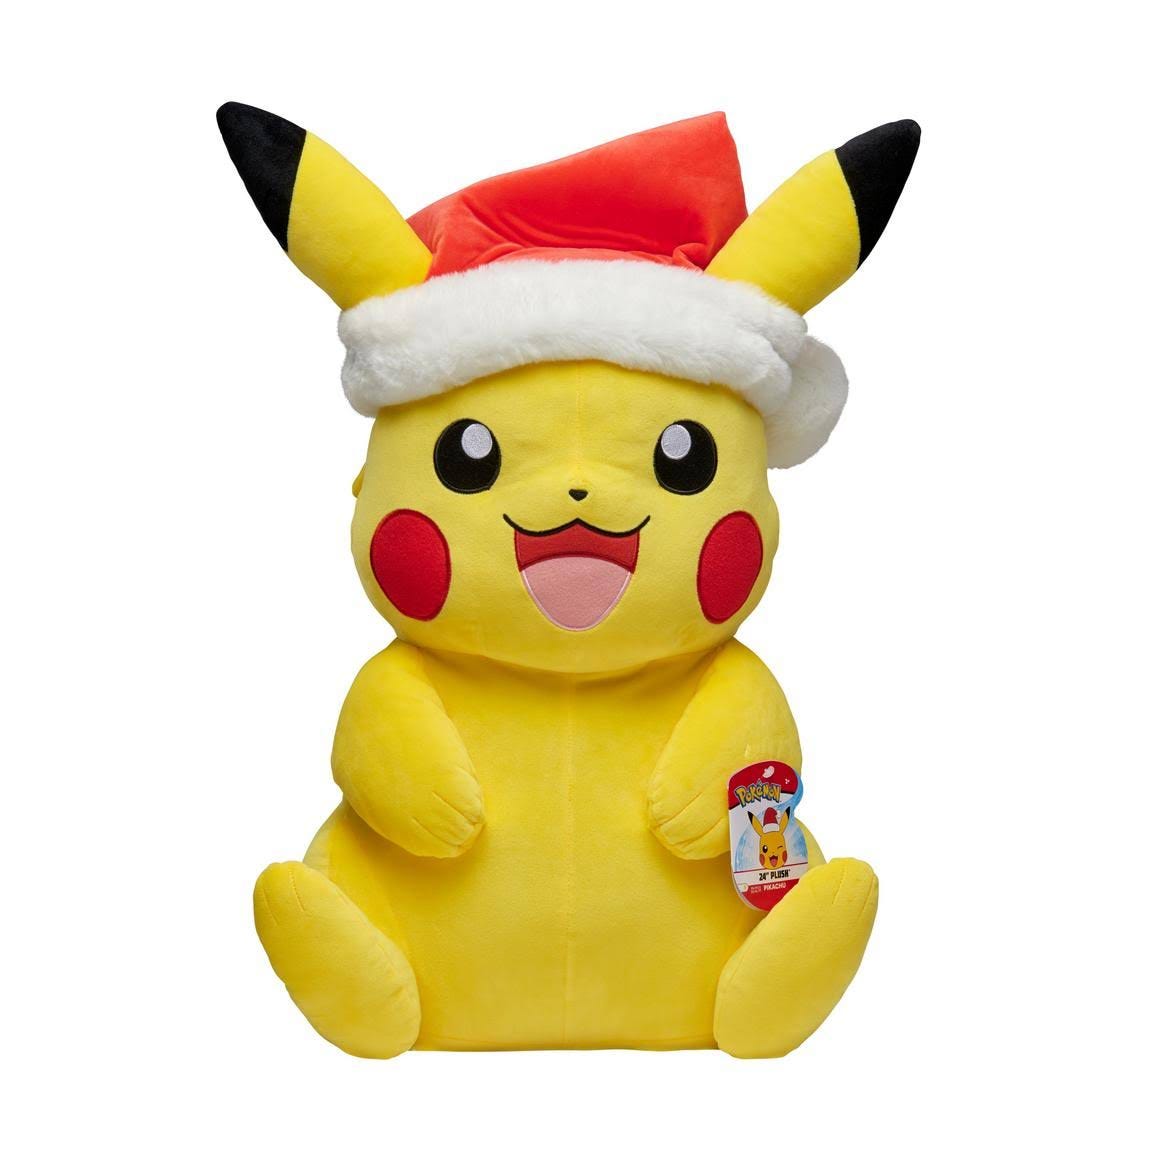 Giant Santa Pikachu Plush for Holiday Adventures | Image